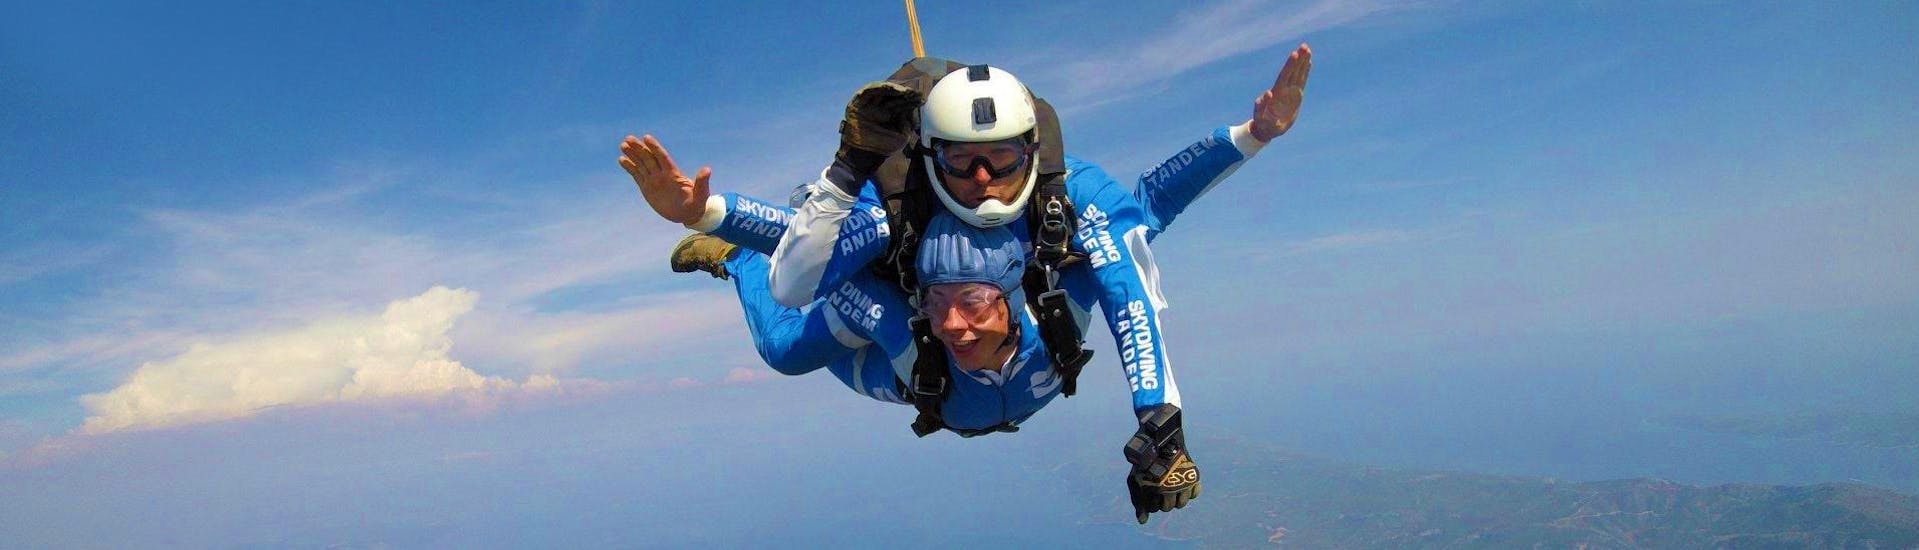 tandem-skydive-from-3000m-in-hvar-skydiving-tandem-group-hero